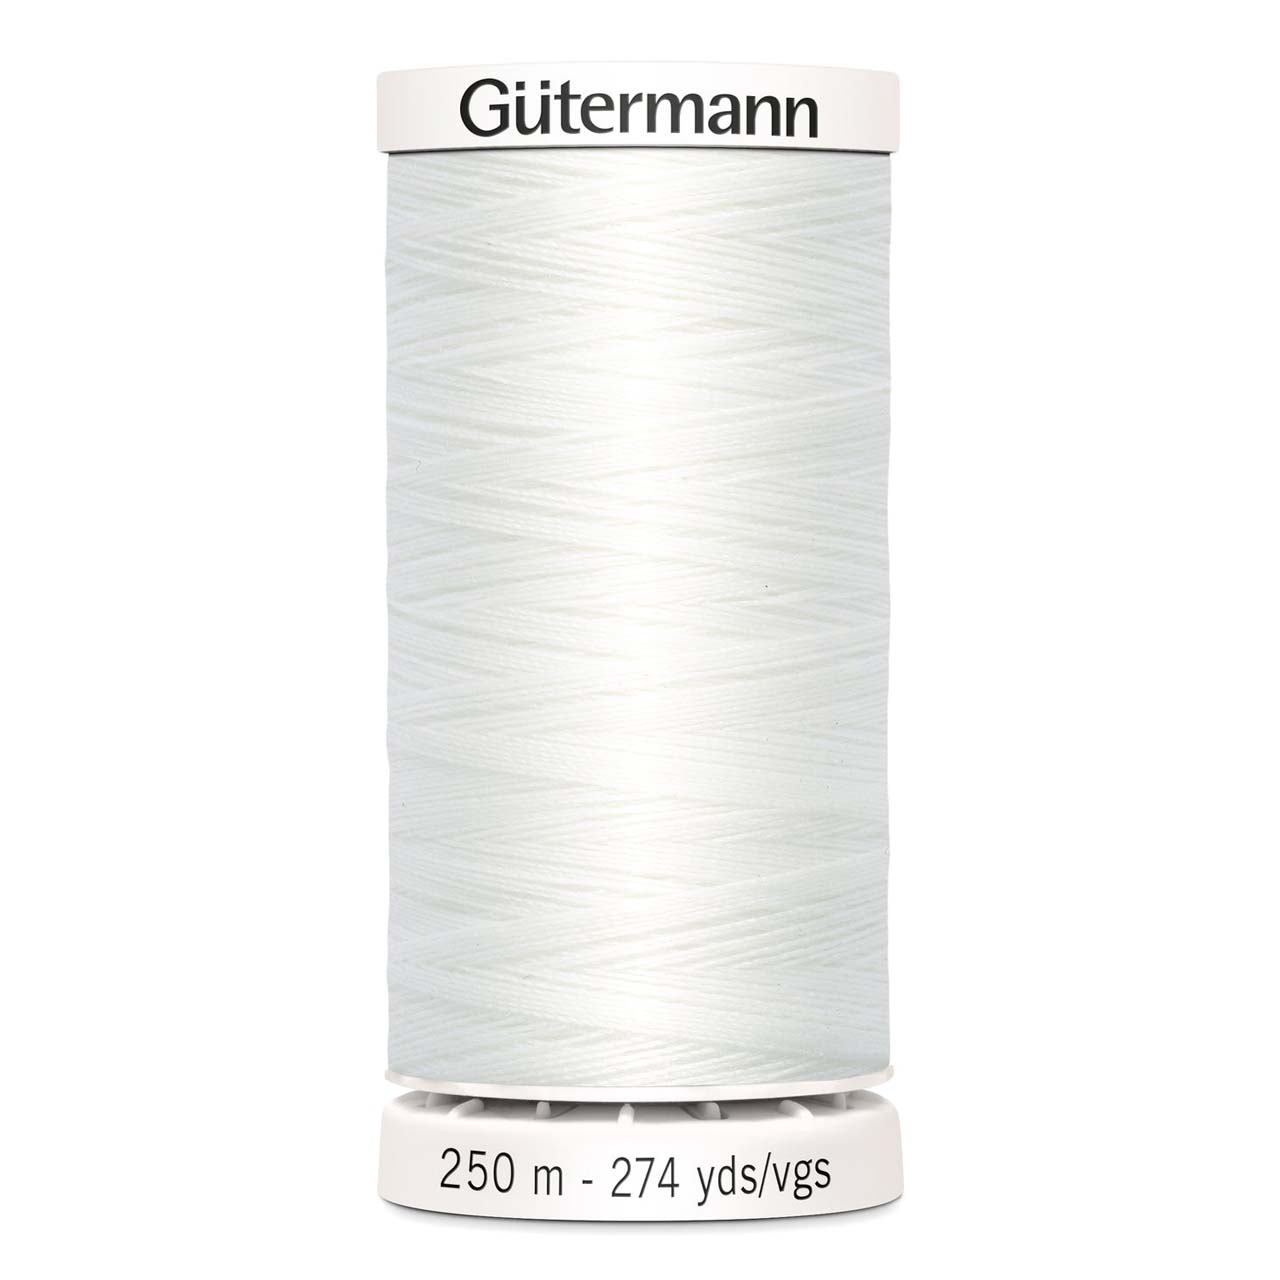 gutermann thread 800 white sewing thread 250 metres